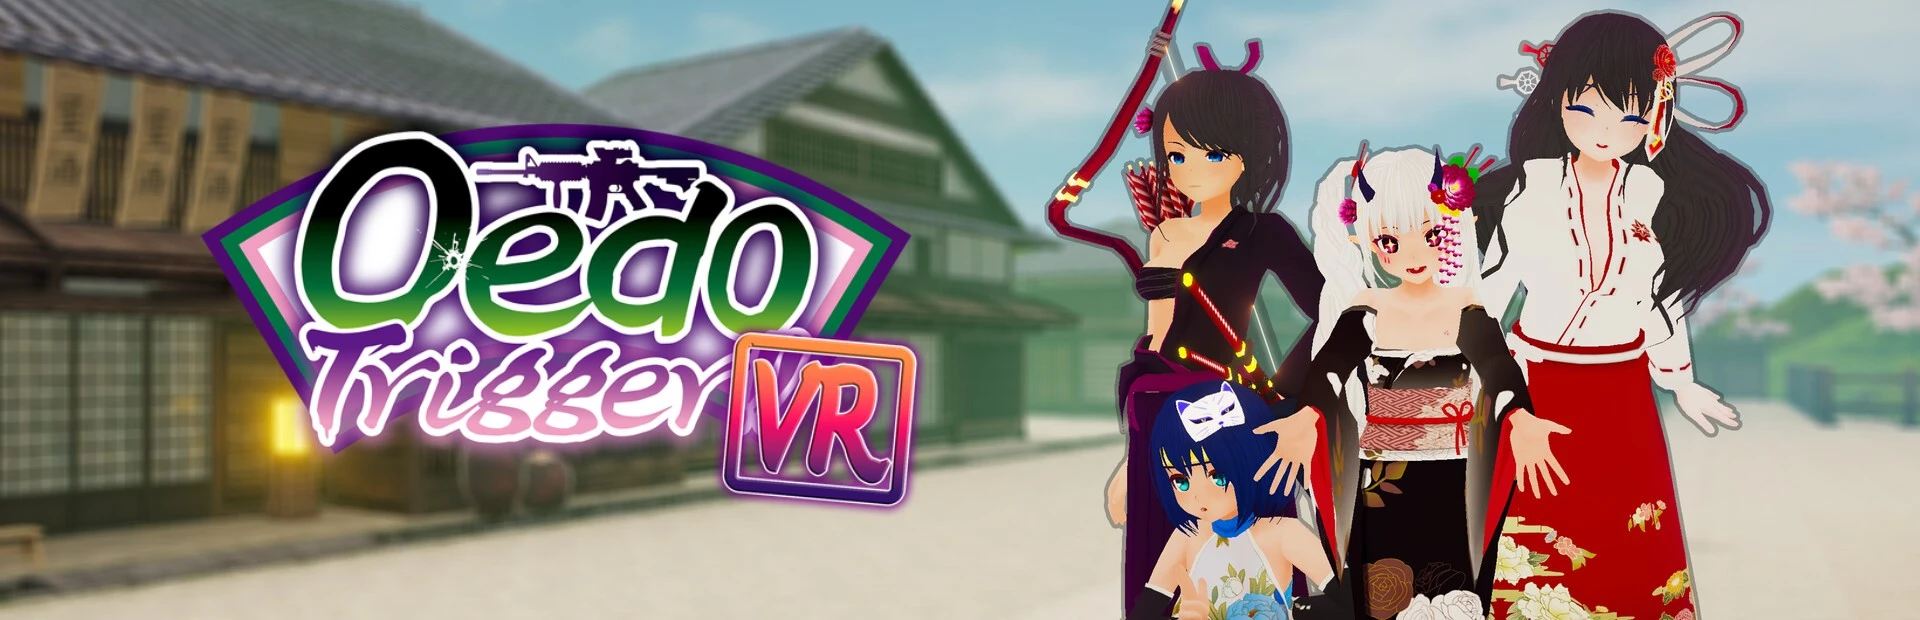 Oedo Trigger VR!![Final] main image